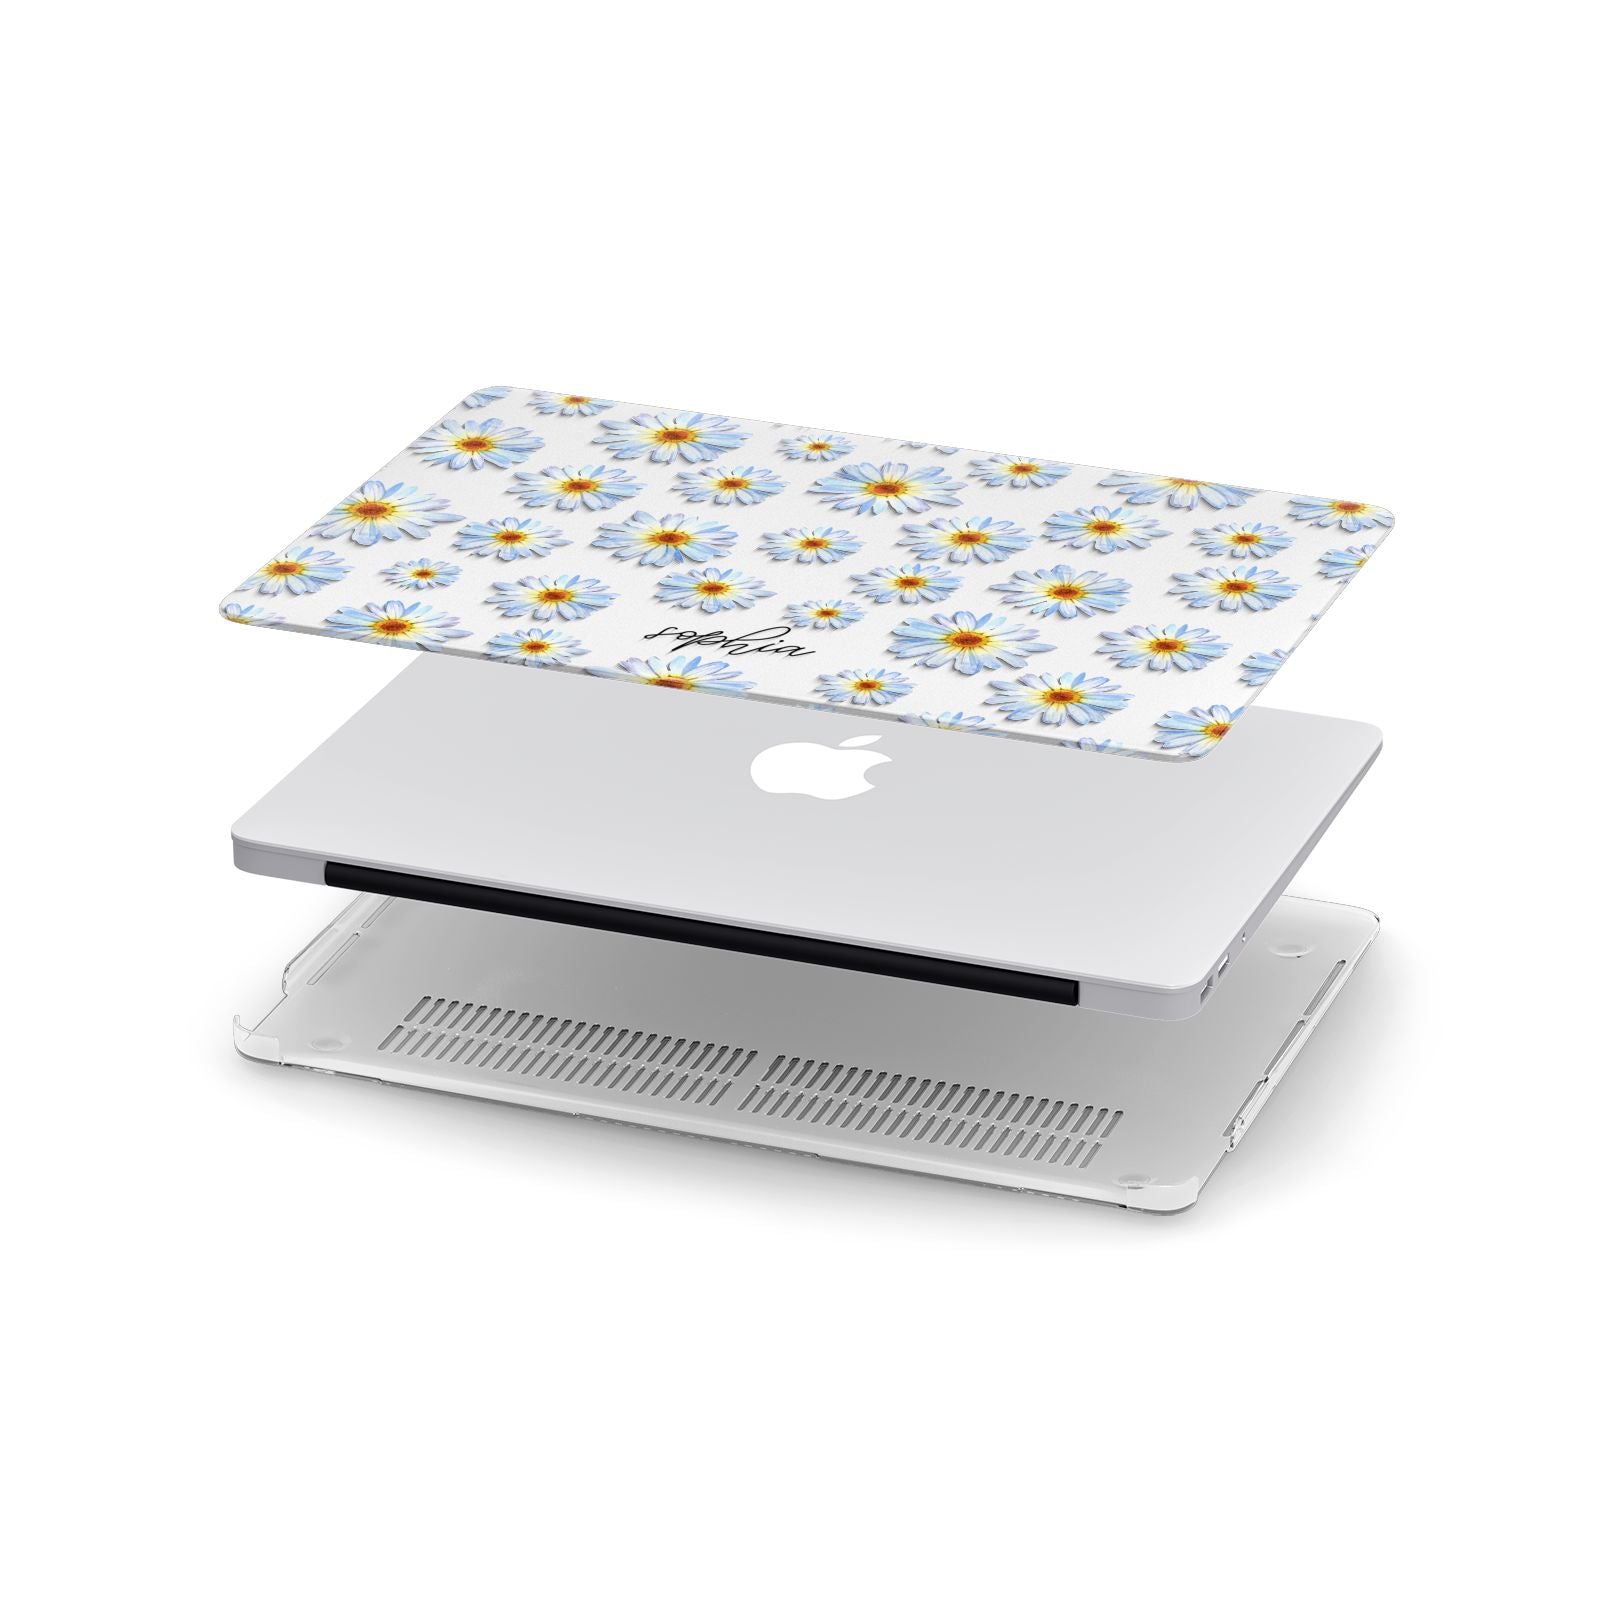 Personalised Daisy Apple MacBook Case in Detail